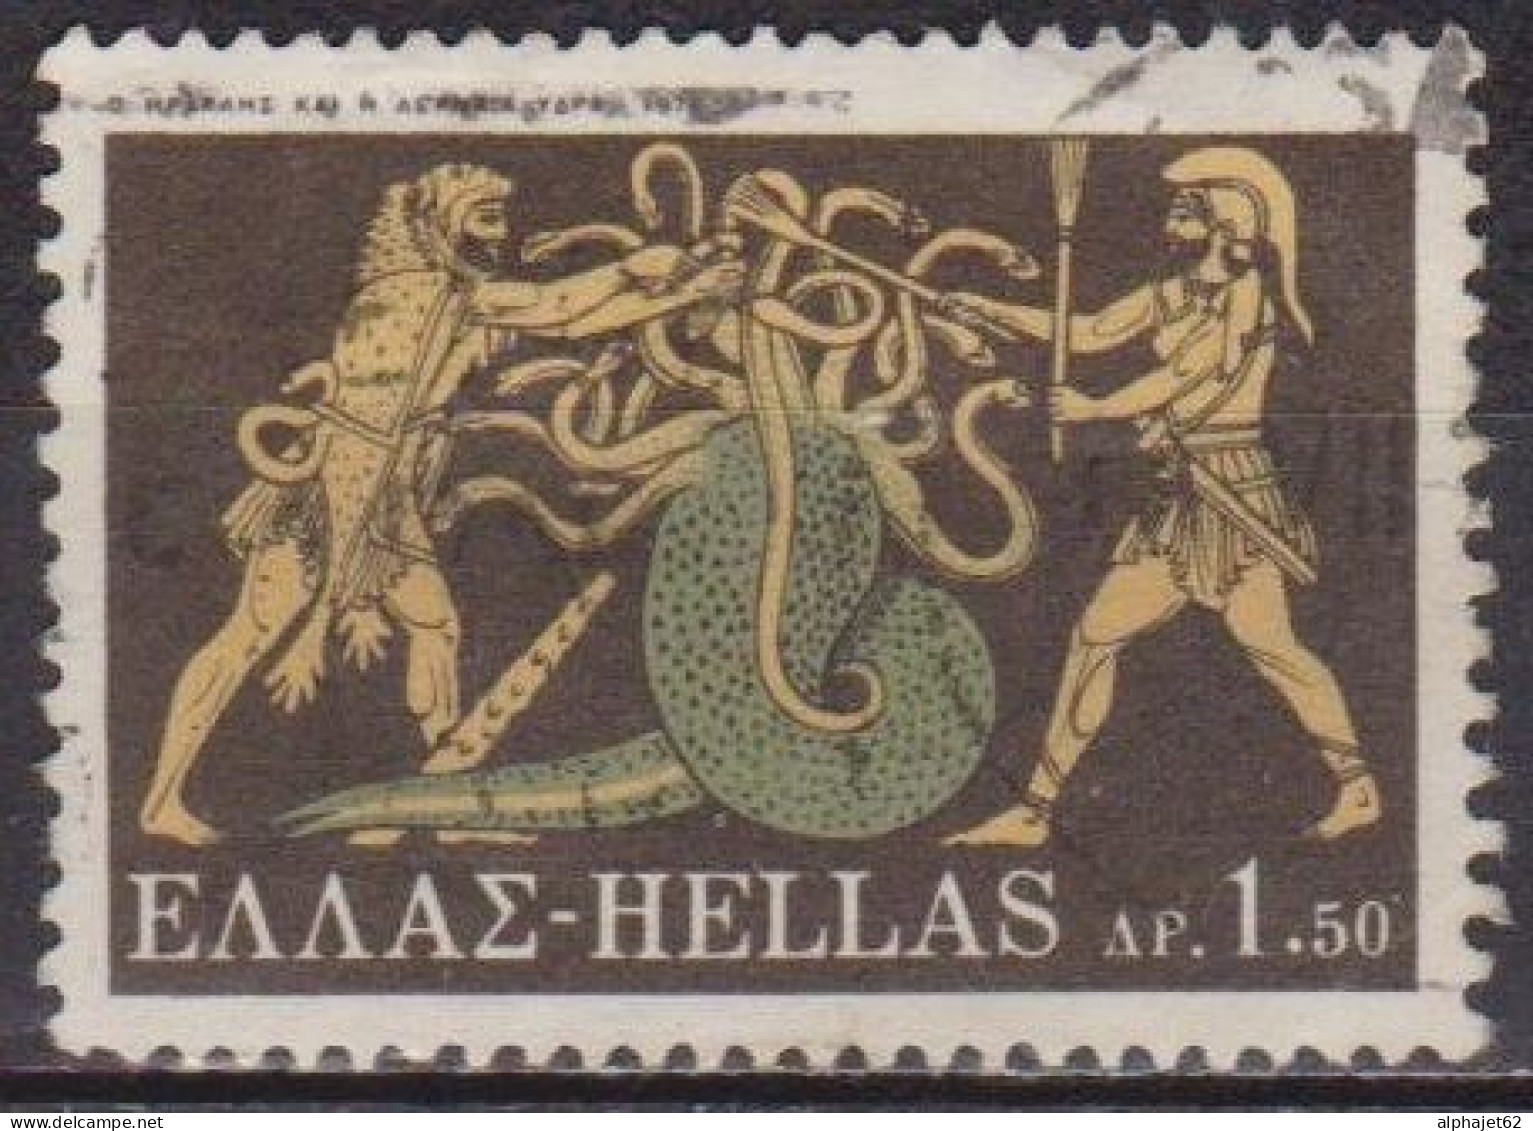 Mythologie - 12 Travaux D'Hercule - GRECE - Hydre De Lerne - N° 1010 - 1970 - Gebraucht